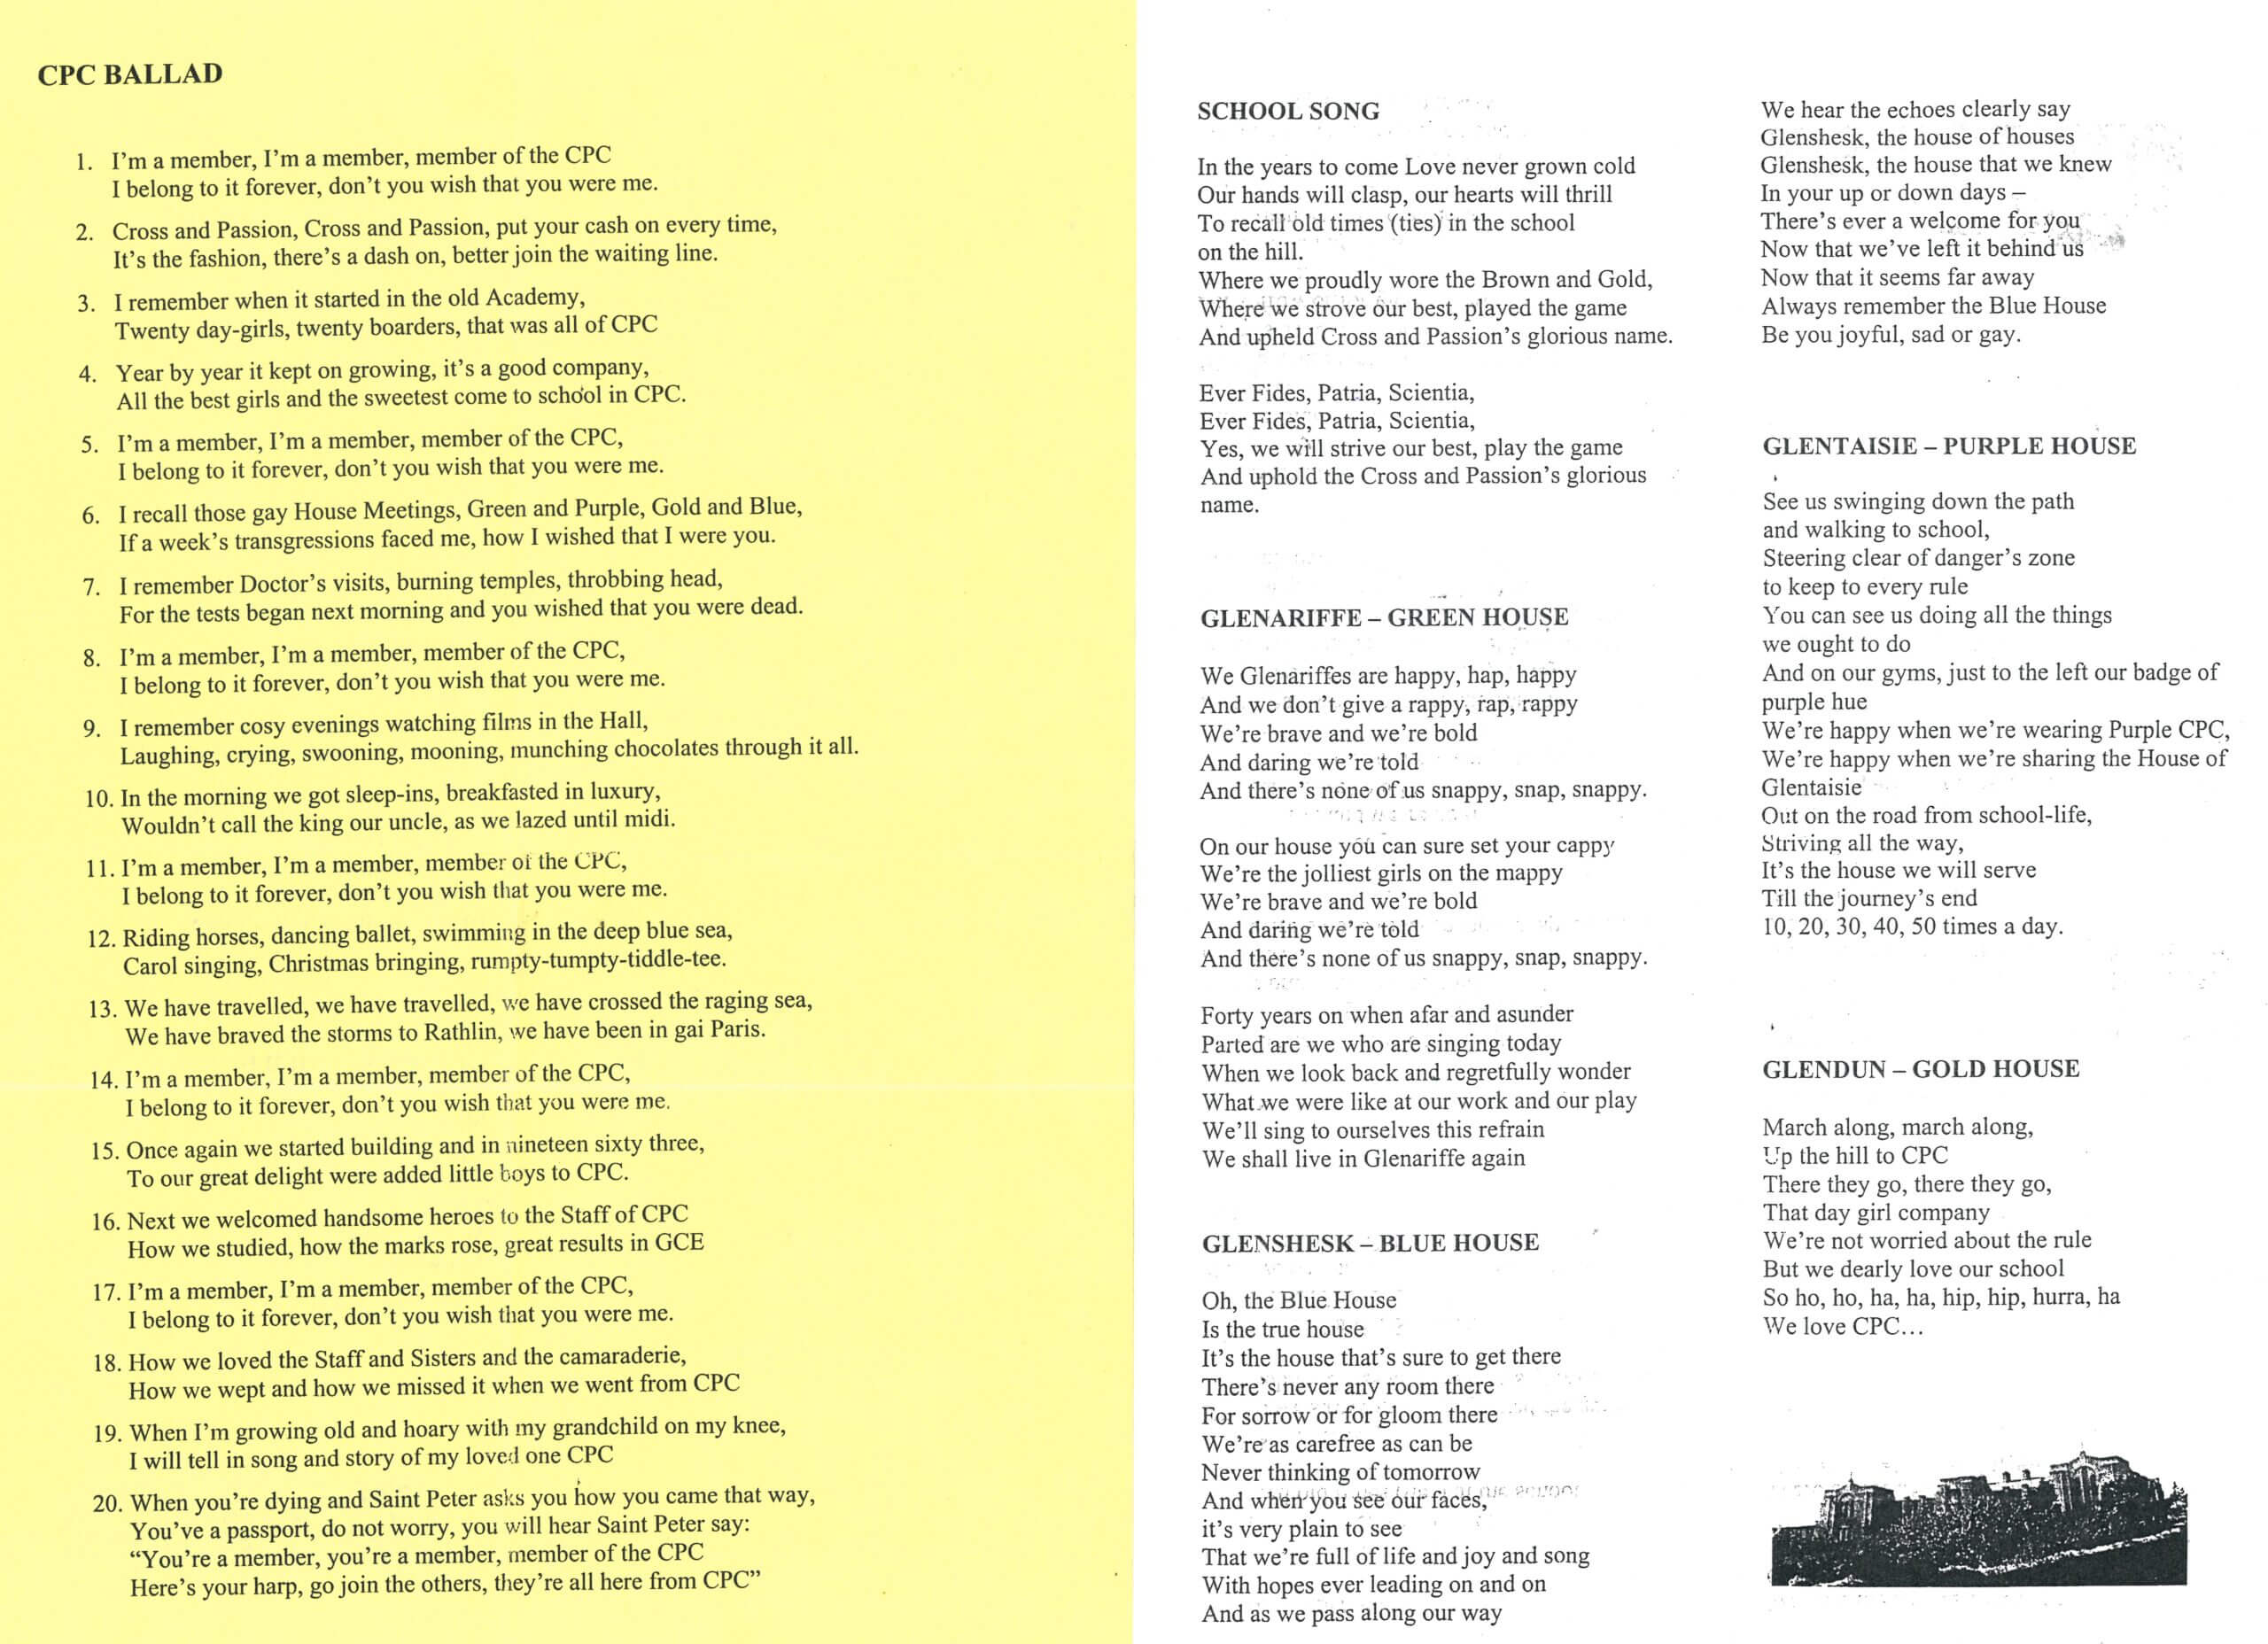 Cross & Passion College Ballad & School Song, Ballycastle